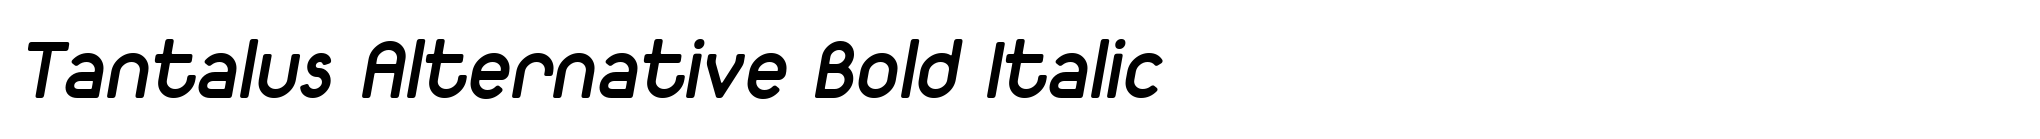 Tantalus Alternative Bold Italic image